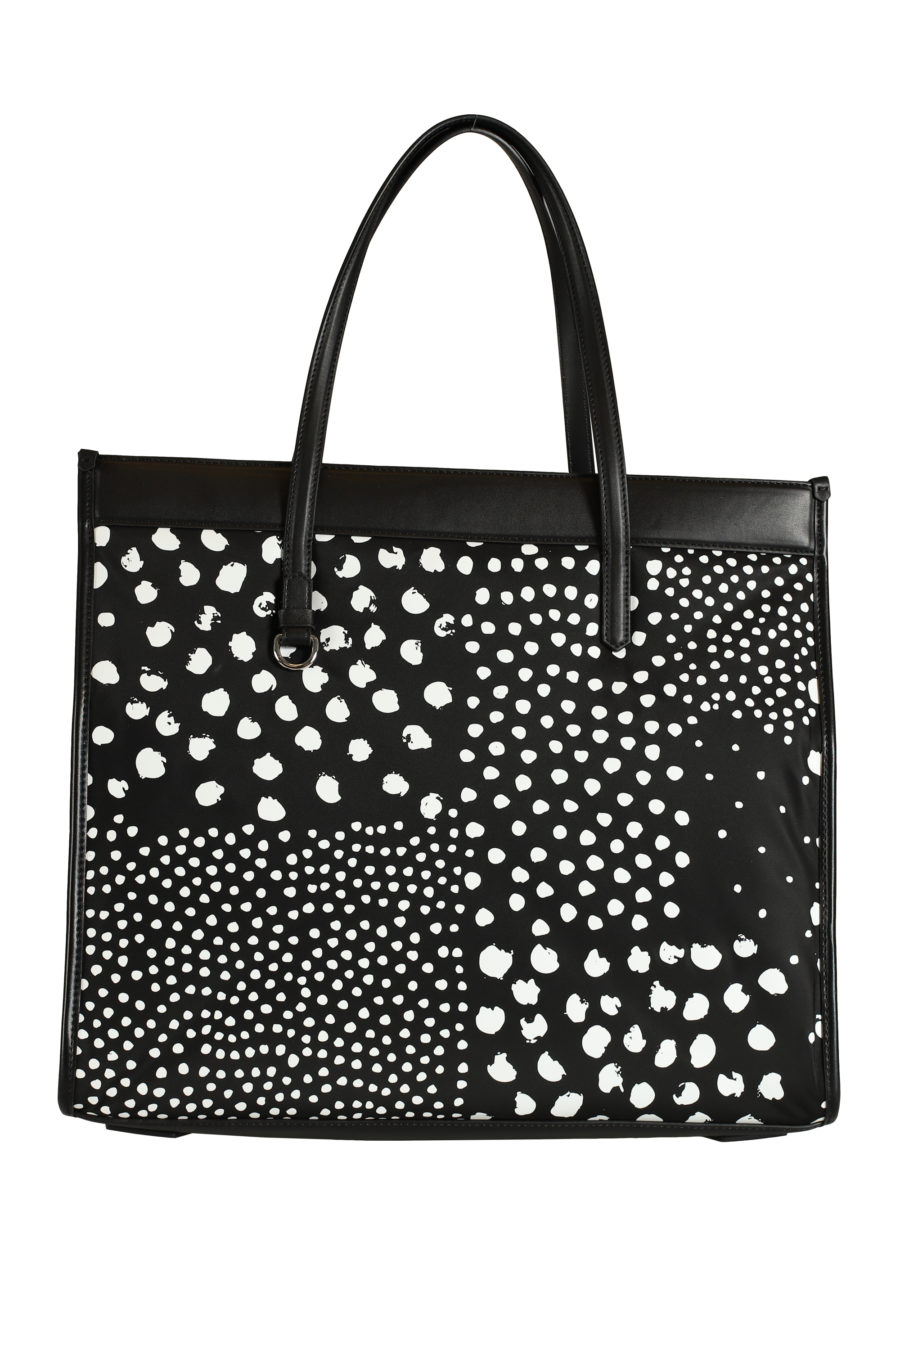 Large black polka dot bag - IMG 3558